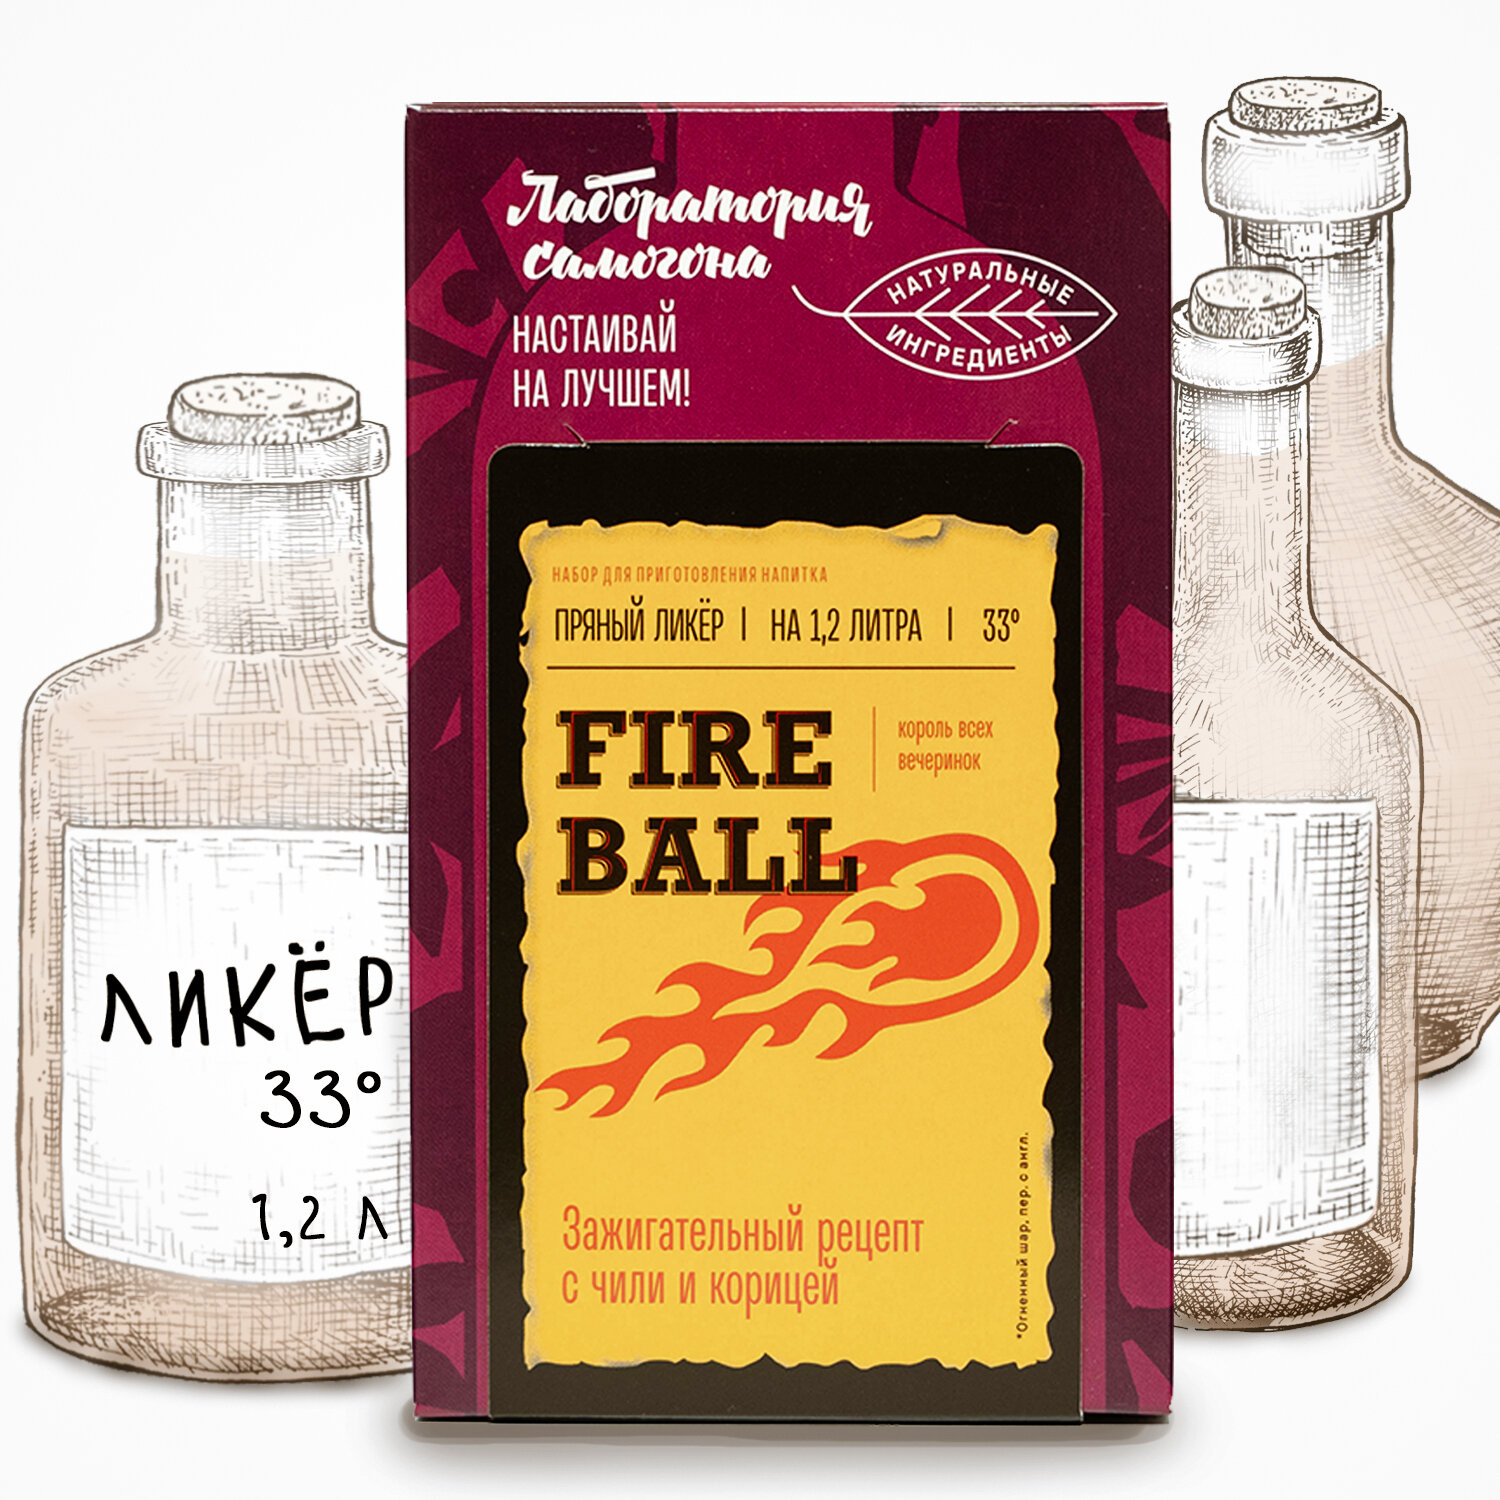 Лаборатория самогона, набор трав и специй для самогона "Fire Ball" ликер, 12 гр